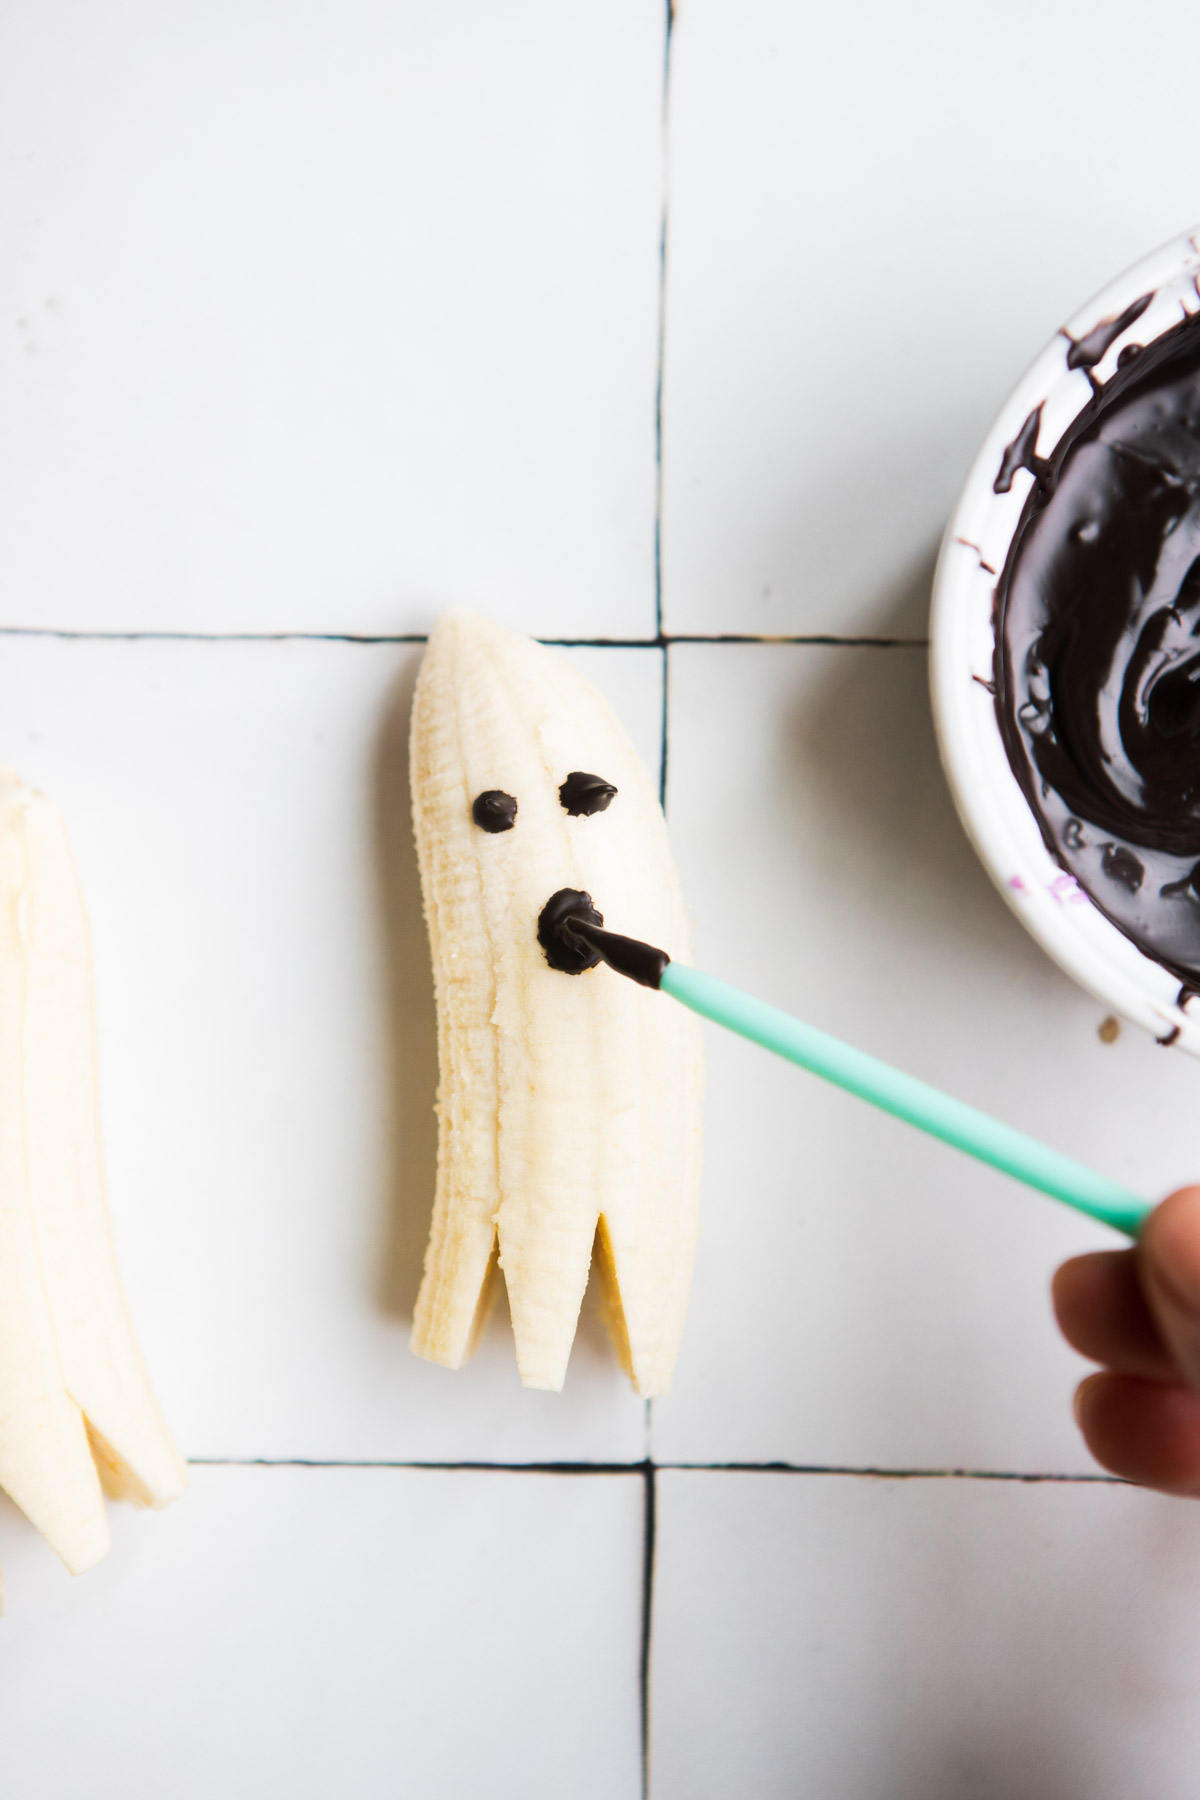 dark chocolate being drawn onto a banana